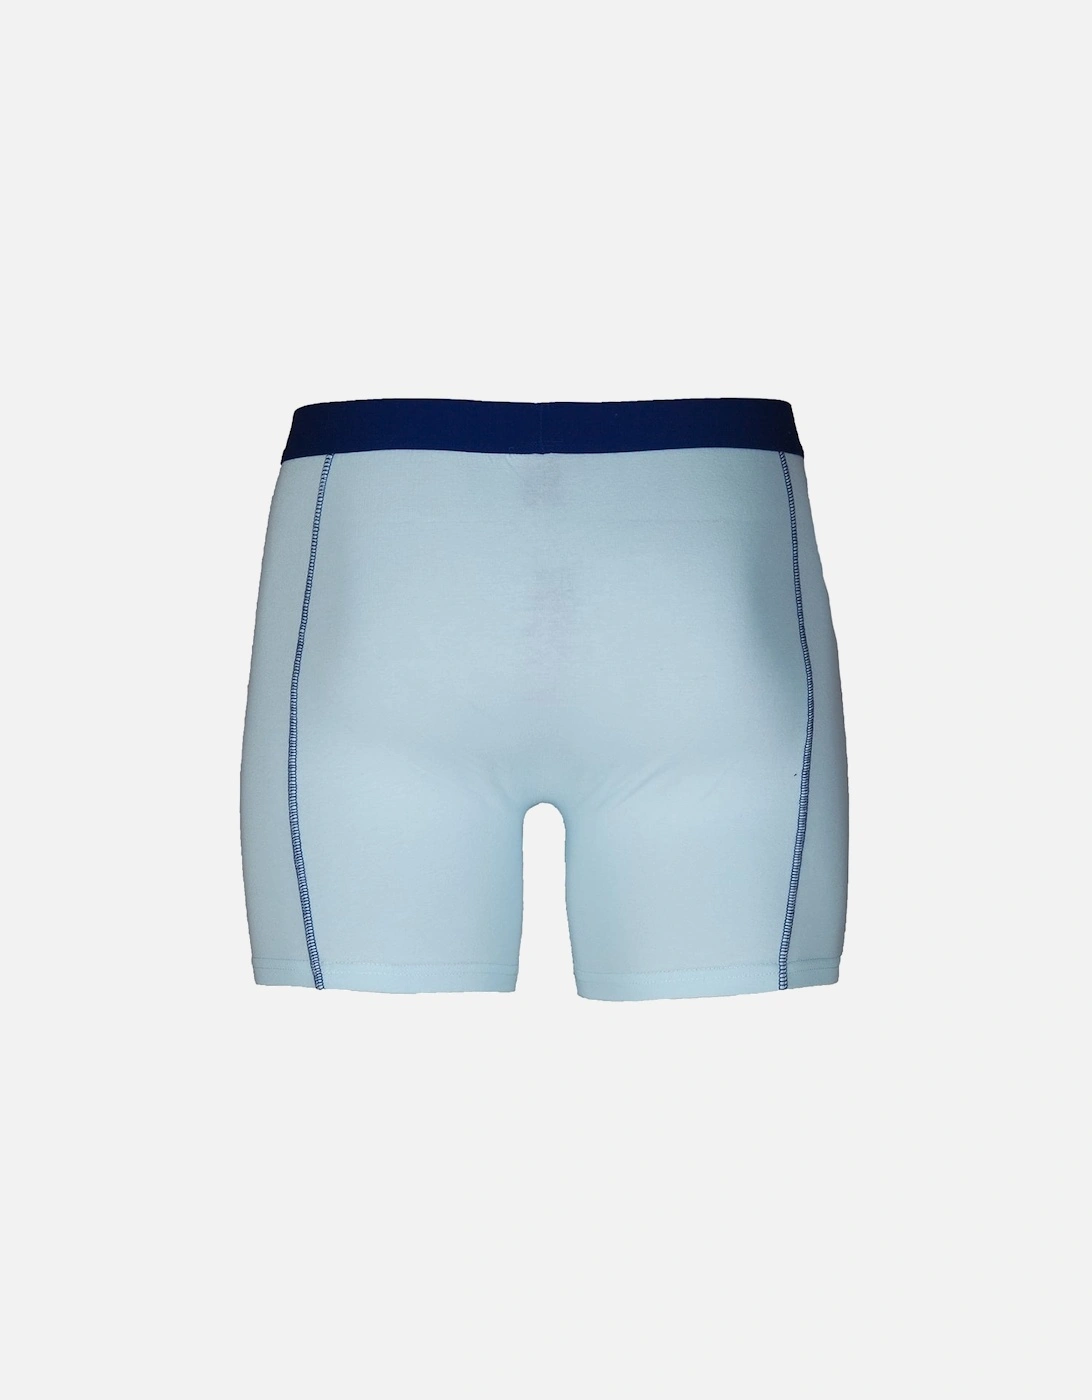 Mens Cotton Stretch Aqua Blue 3 Pack Boxer Shorts